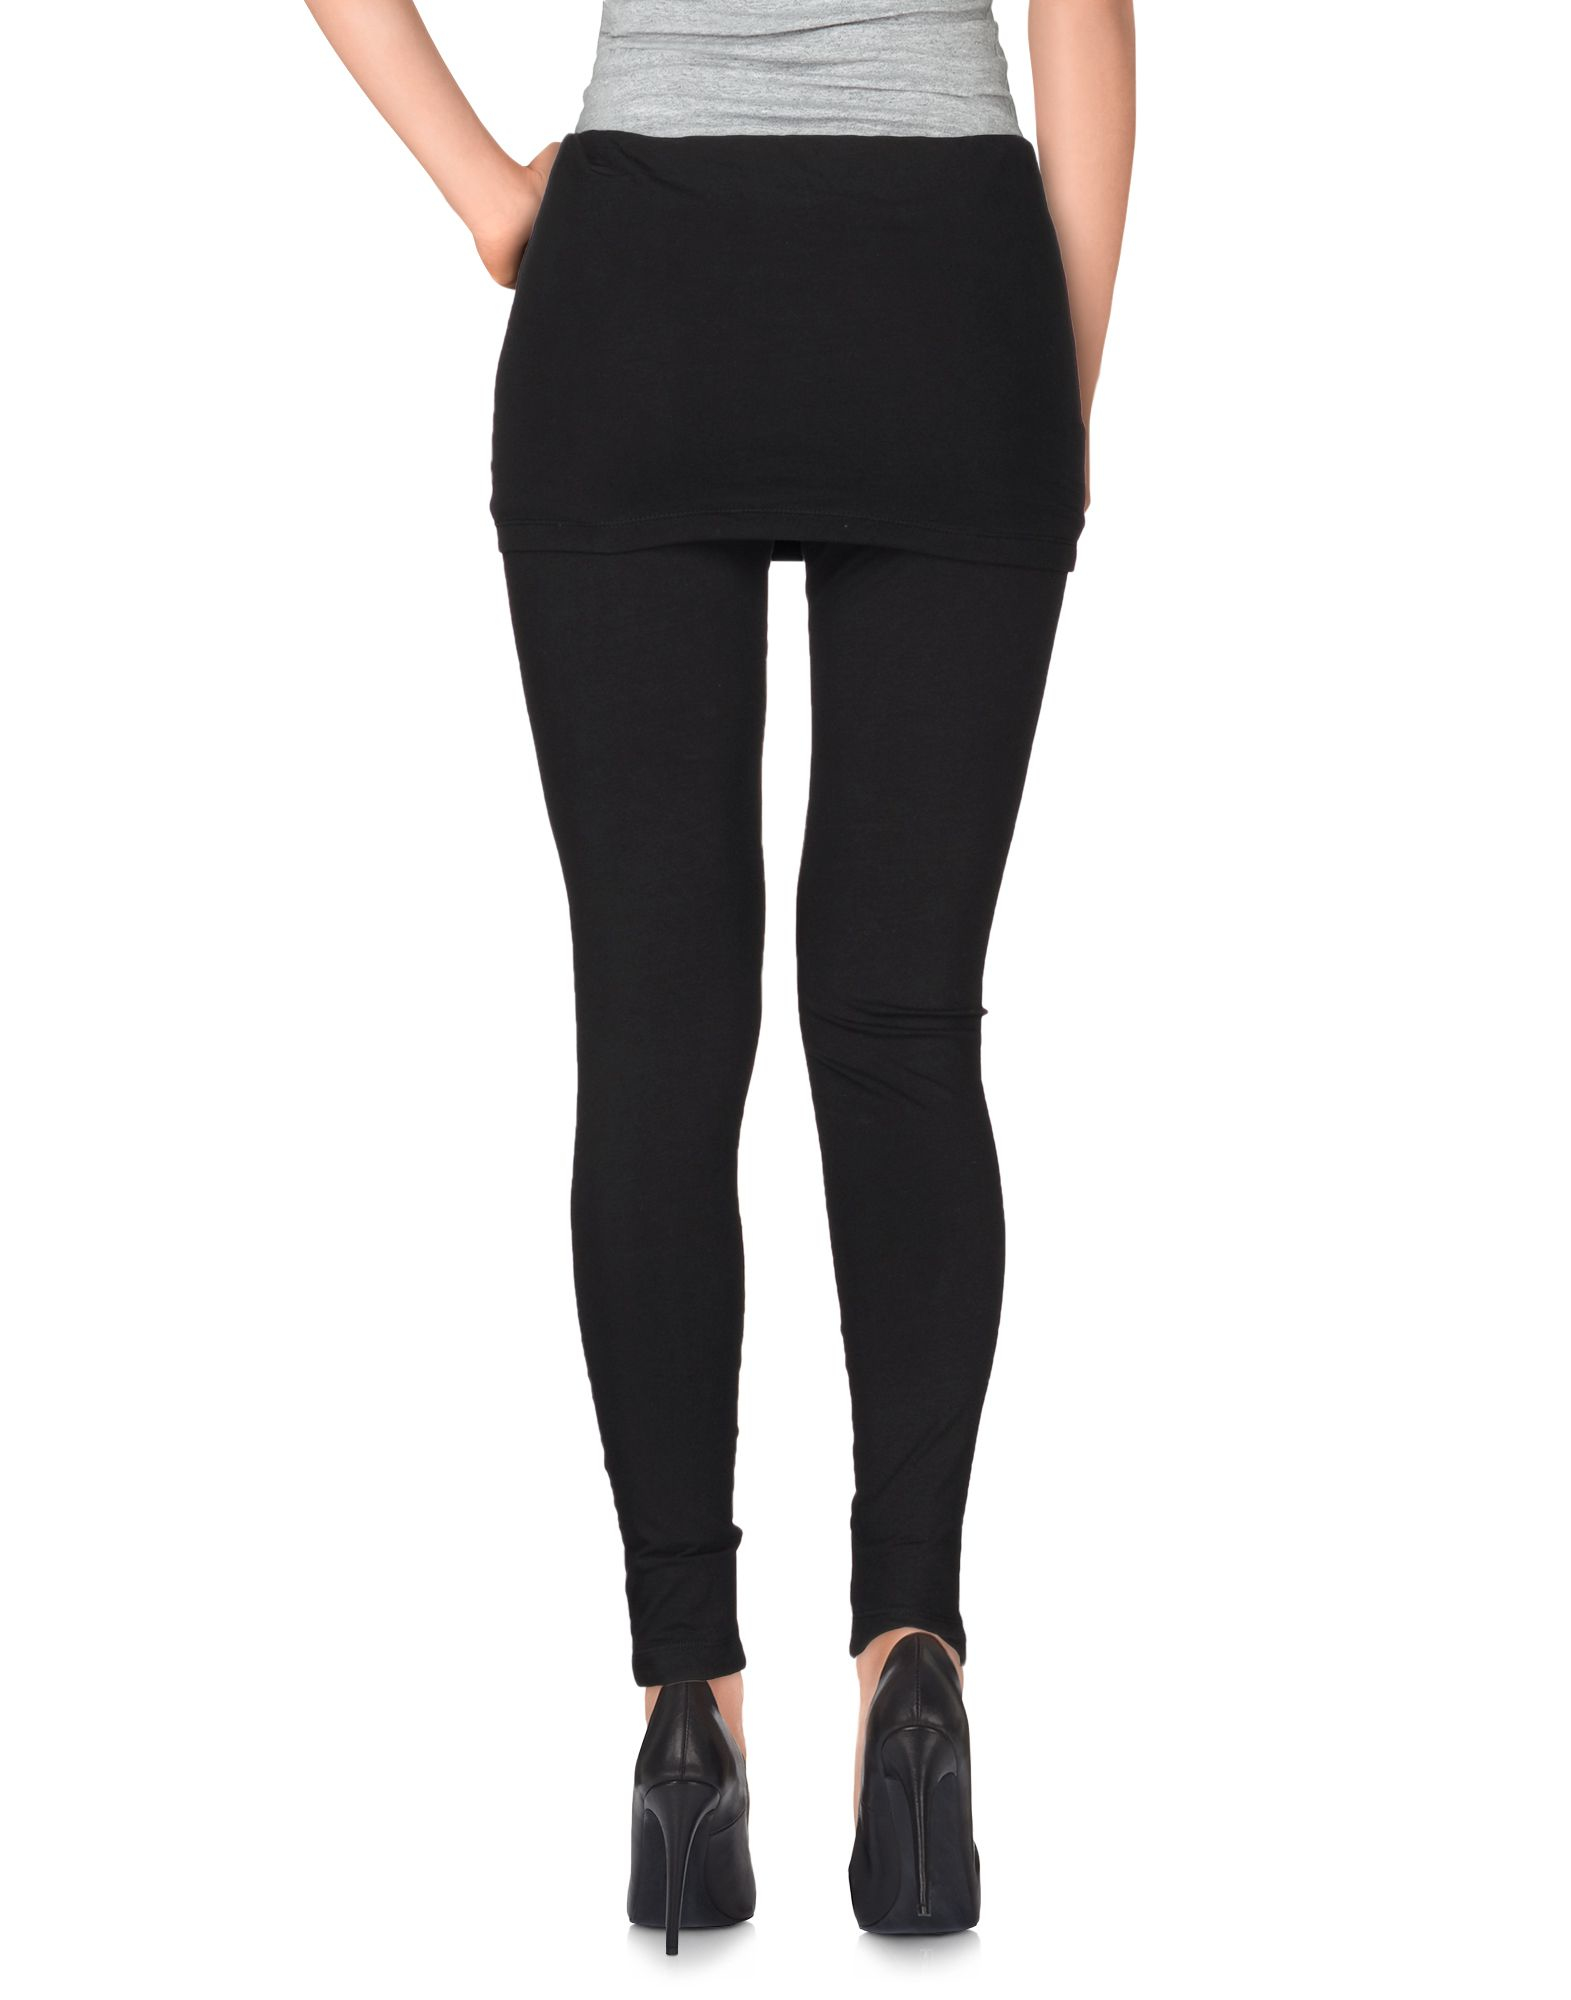 dkny pure black leggings product 0 714416897 normal